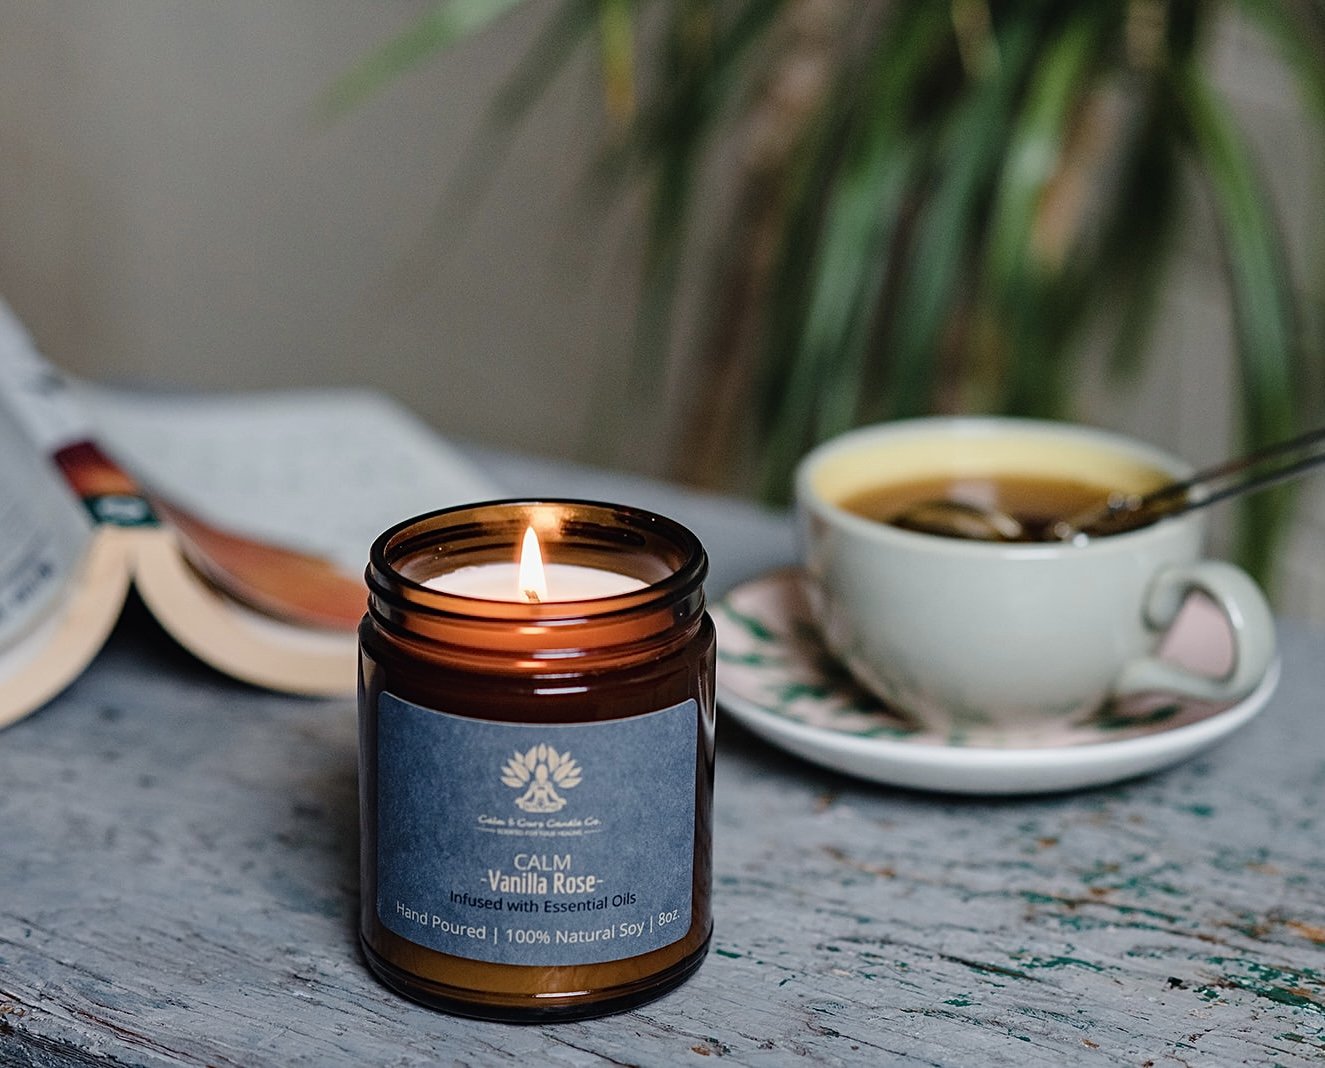 Peace: Frankincense and Myrrh — Calm & Cure Candle Co.